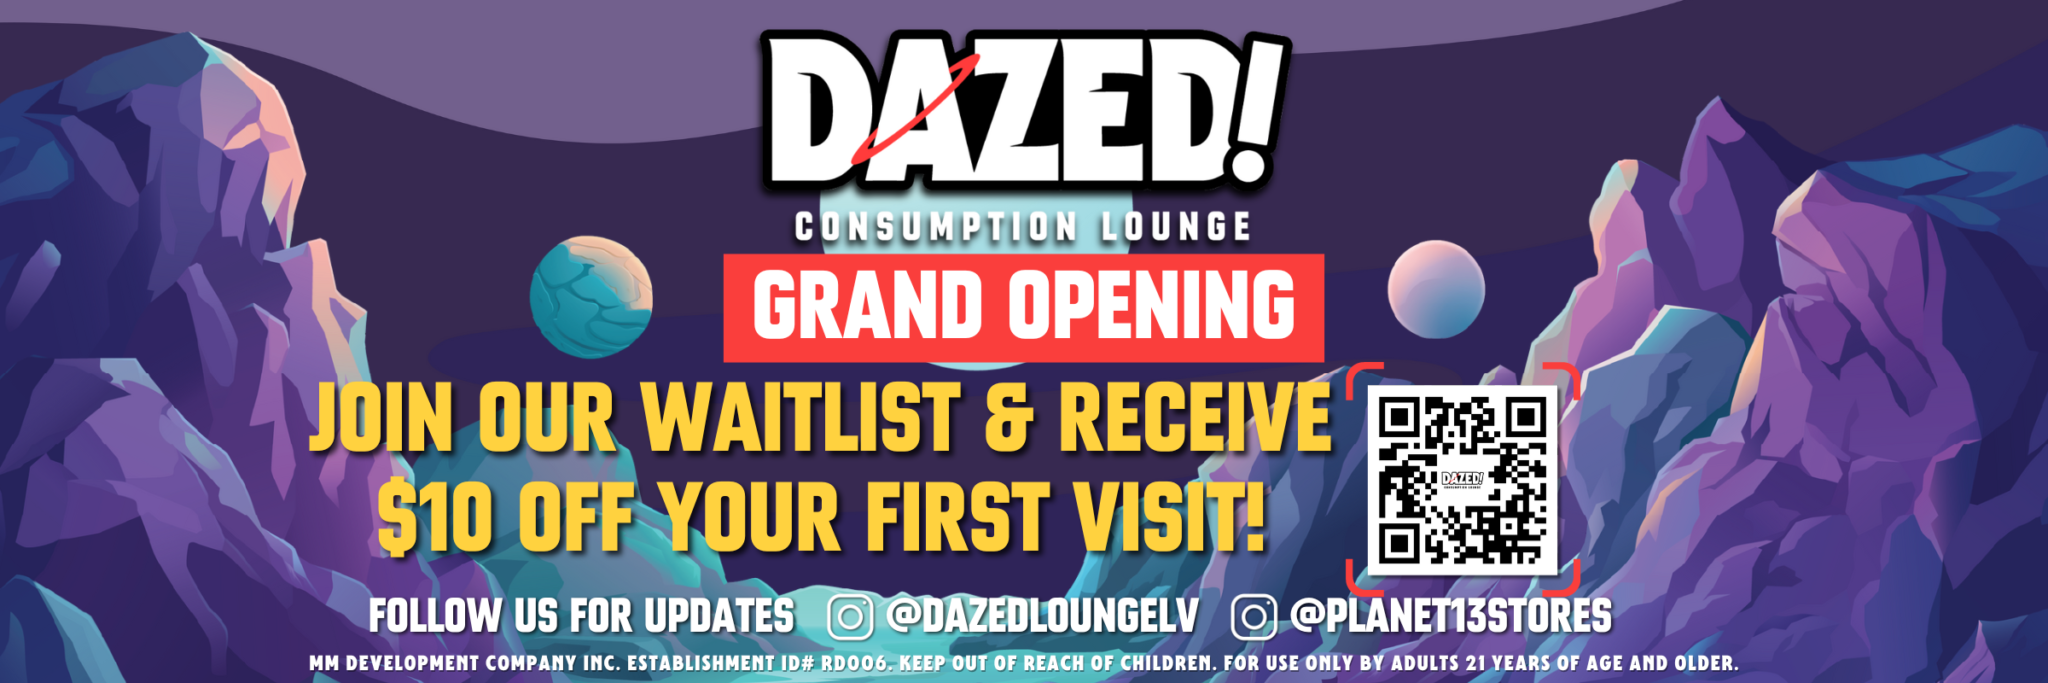 DAZED! CONSUMPTION LOUNGE Grand Opening